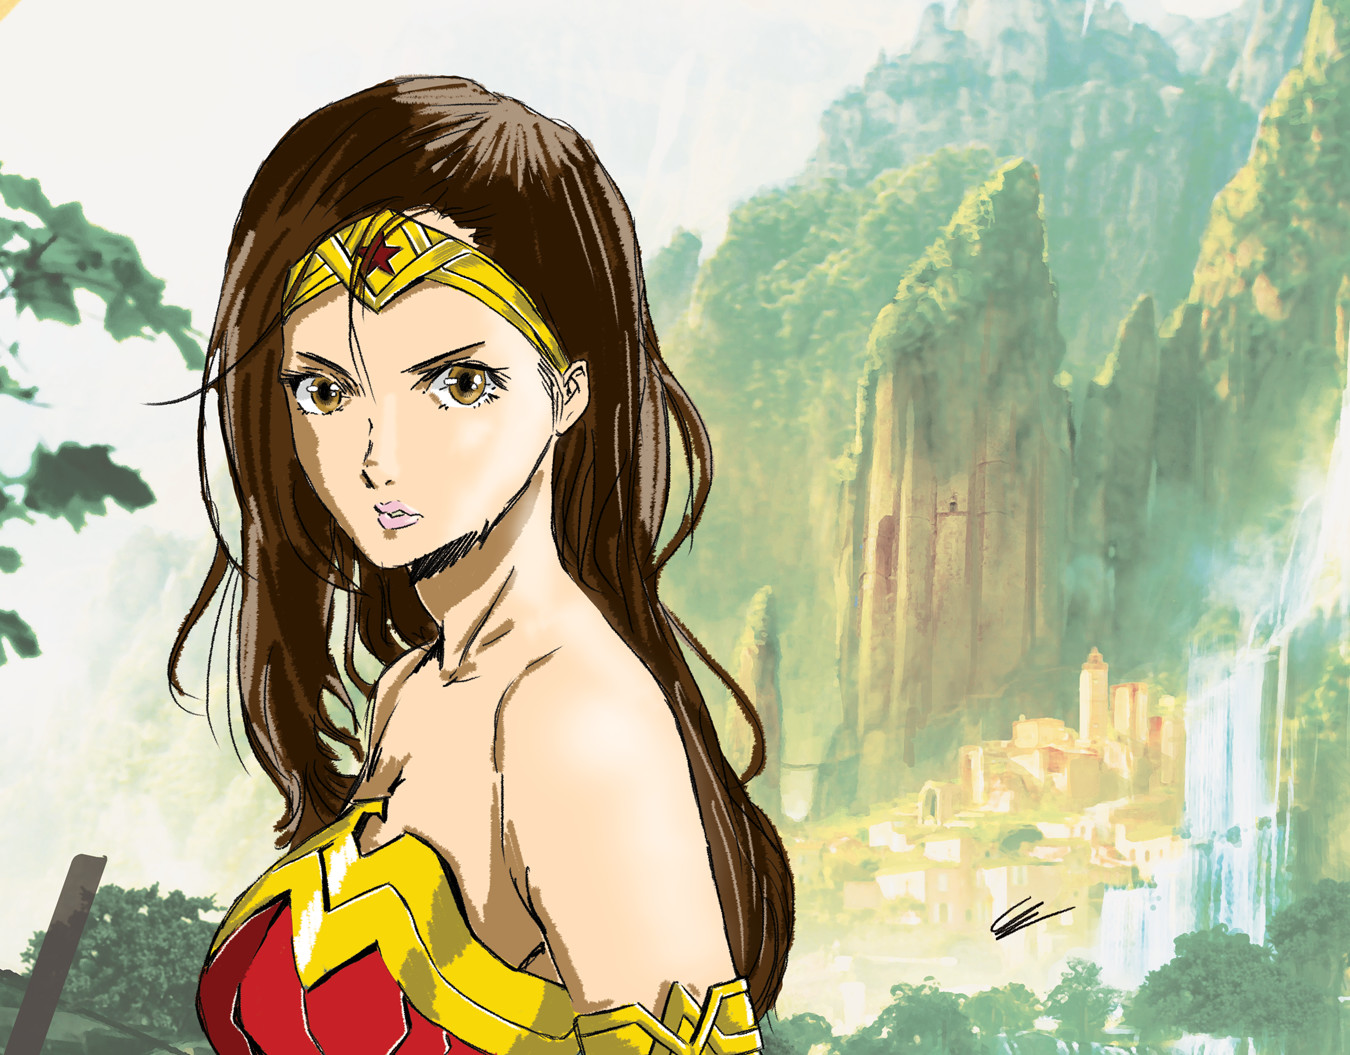 Anime depiction of wonder woman